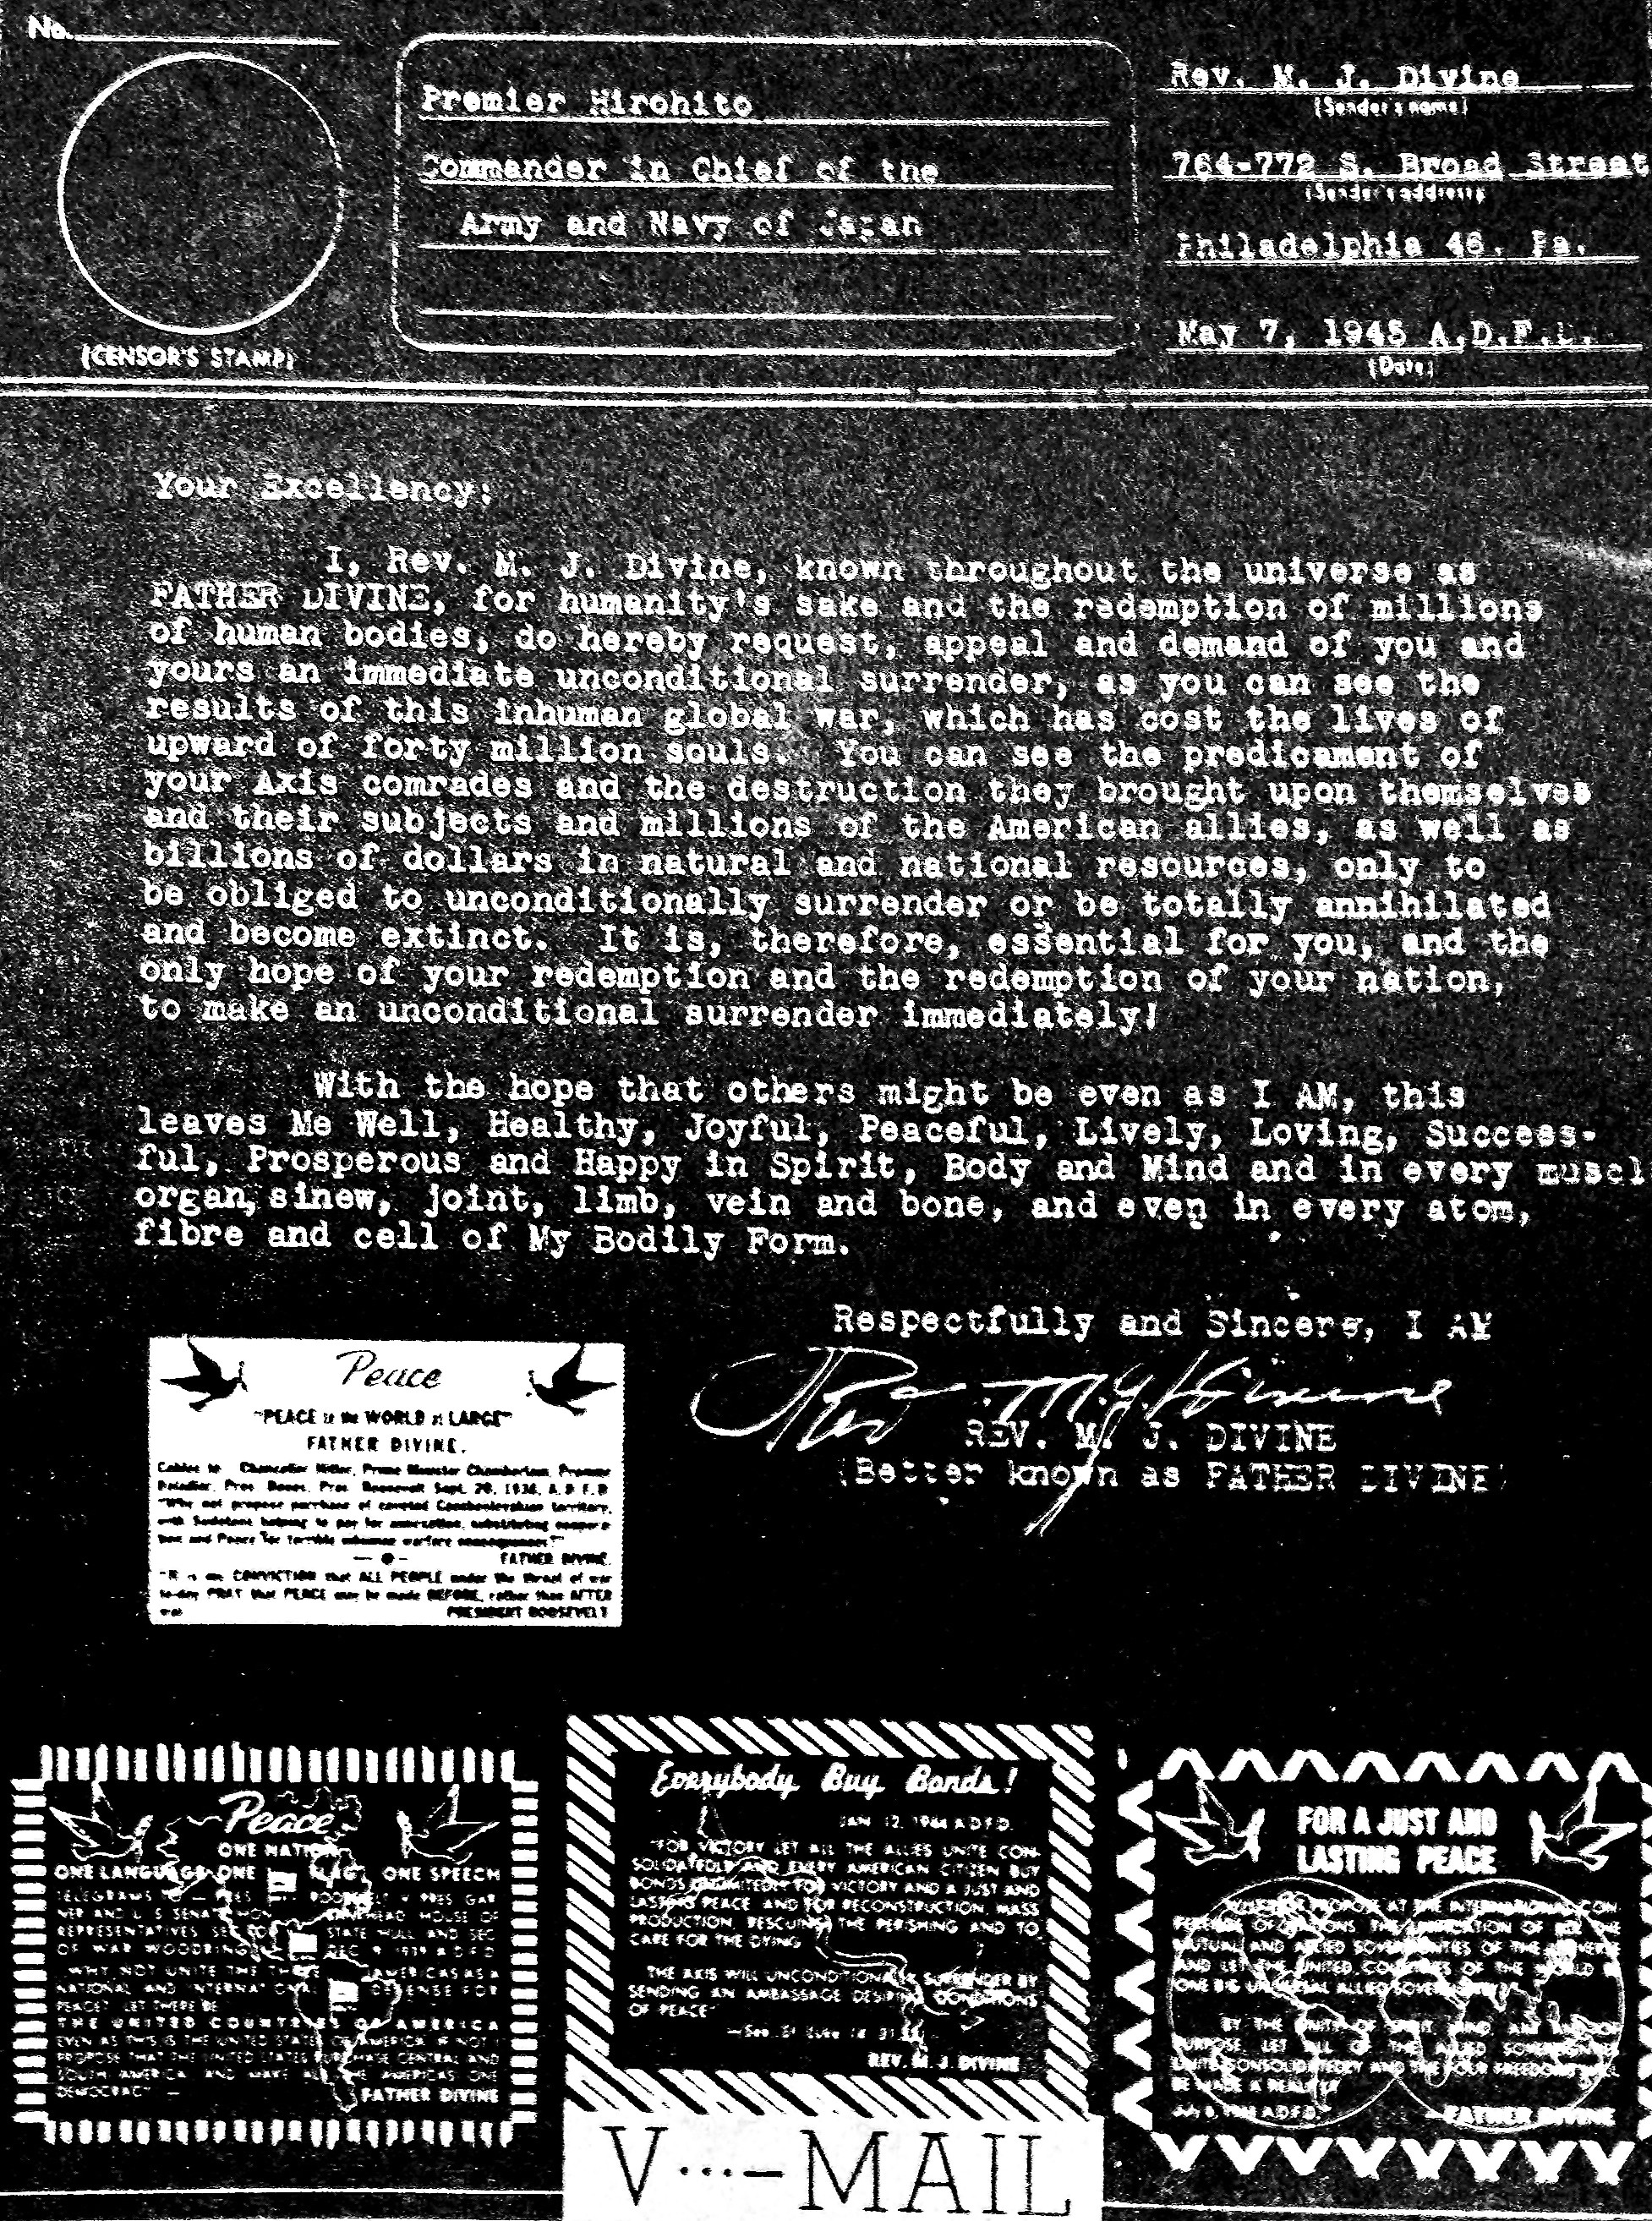 FATHER DIVINE'S V-Letter to Hirohito